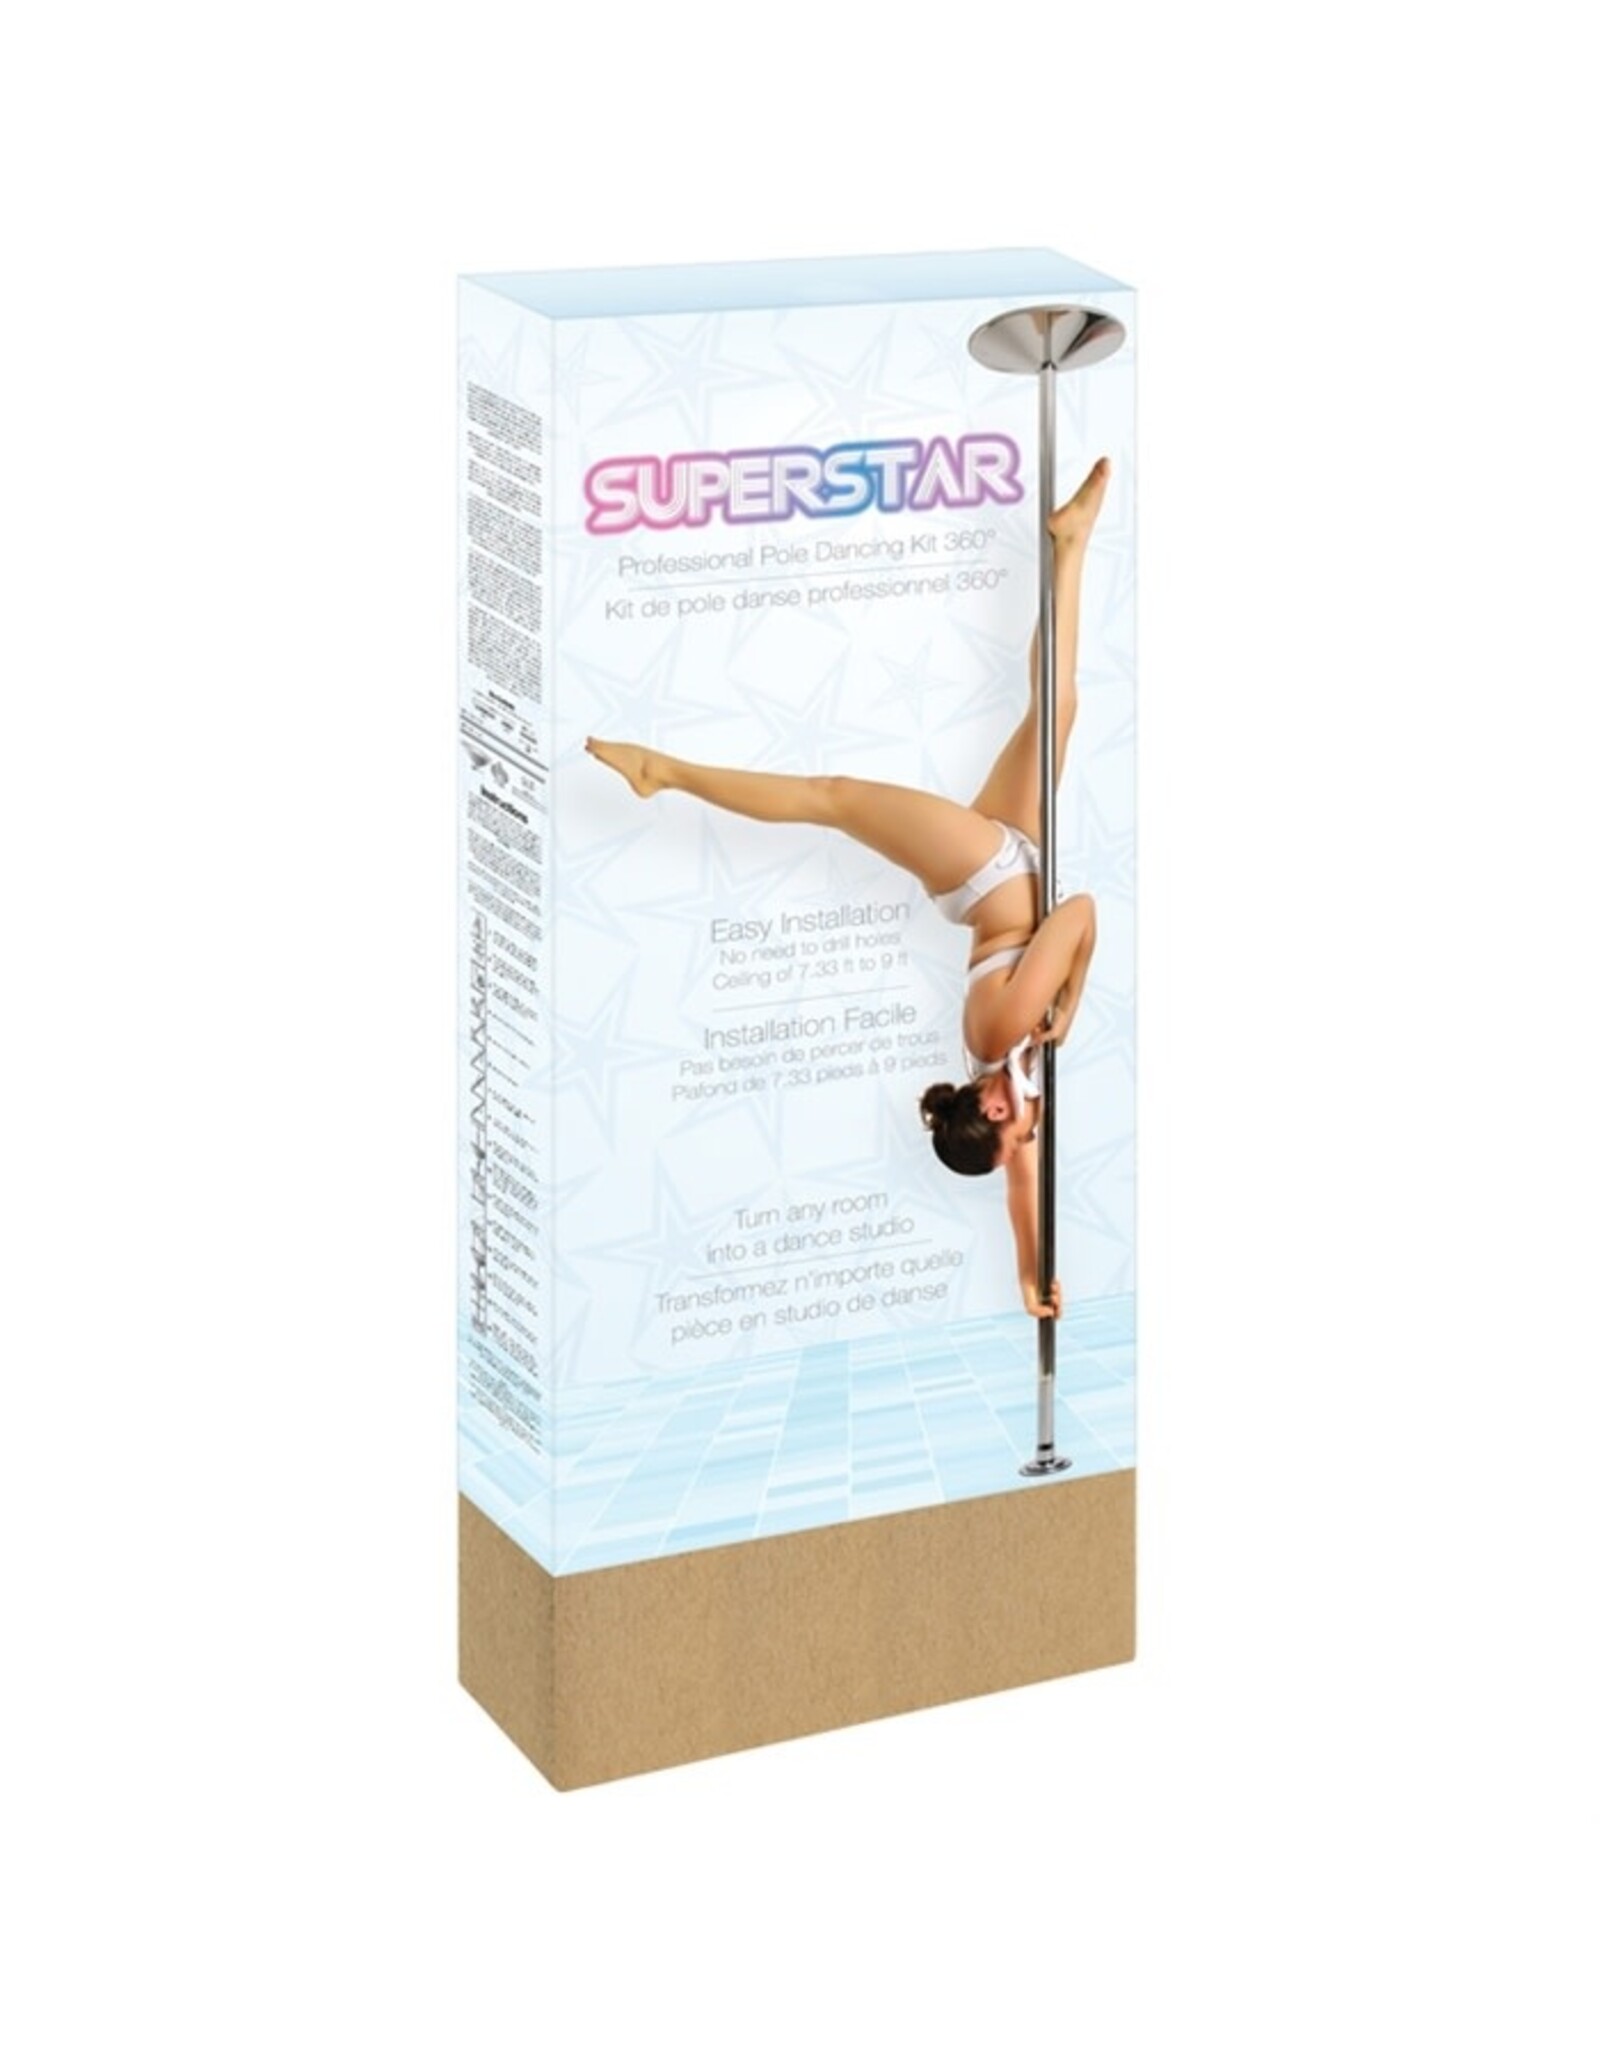 ViVilo Superstar Professional Pole Dancing Kit 360